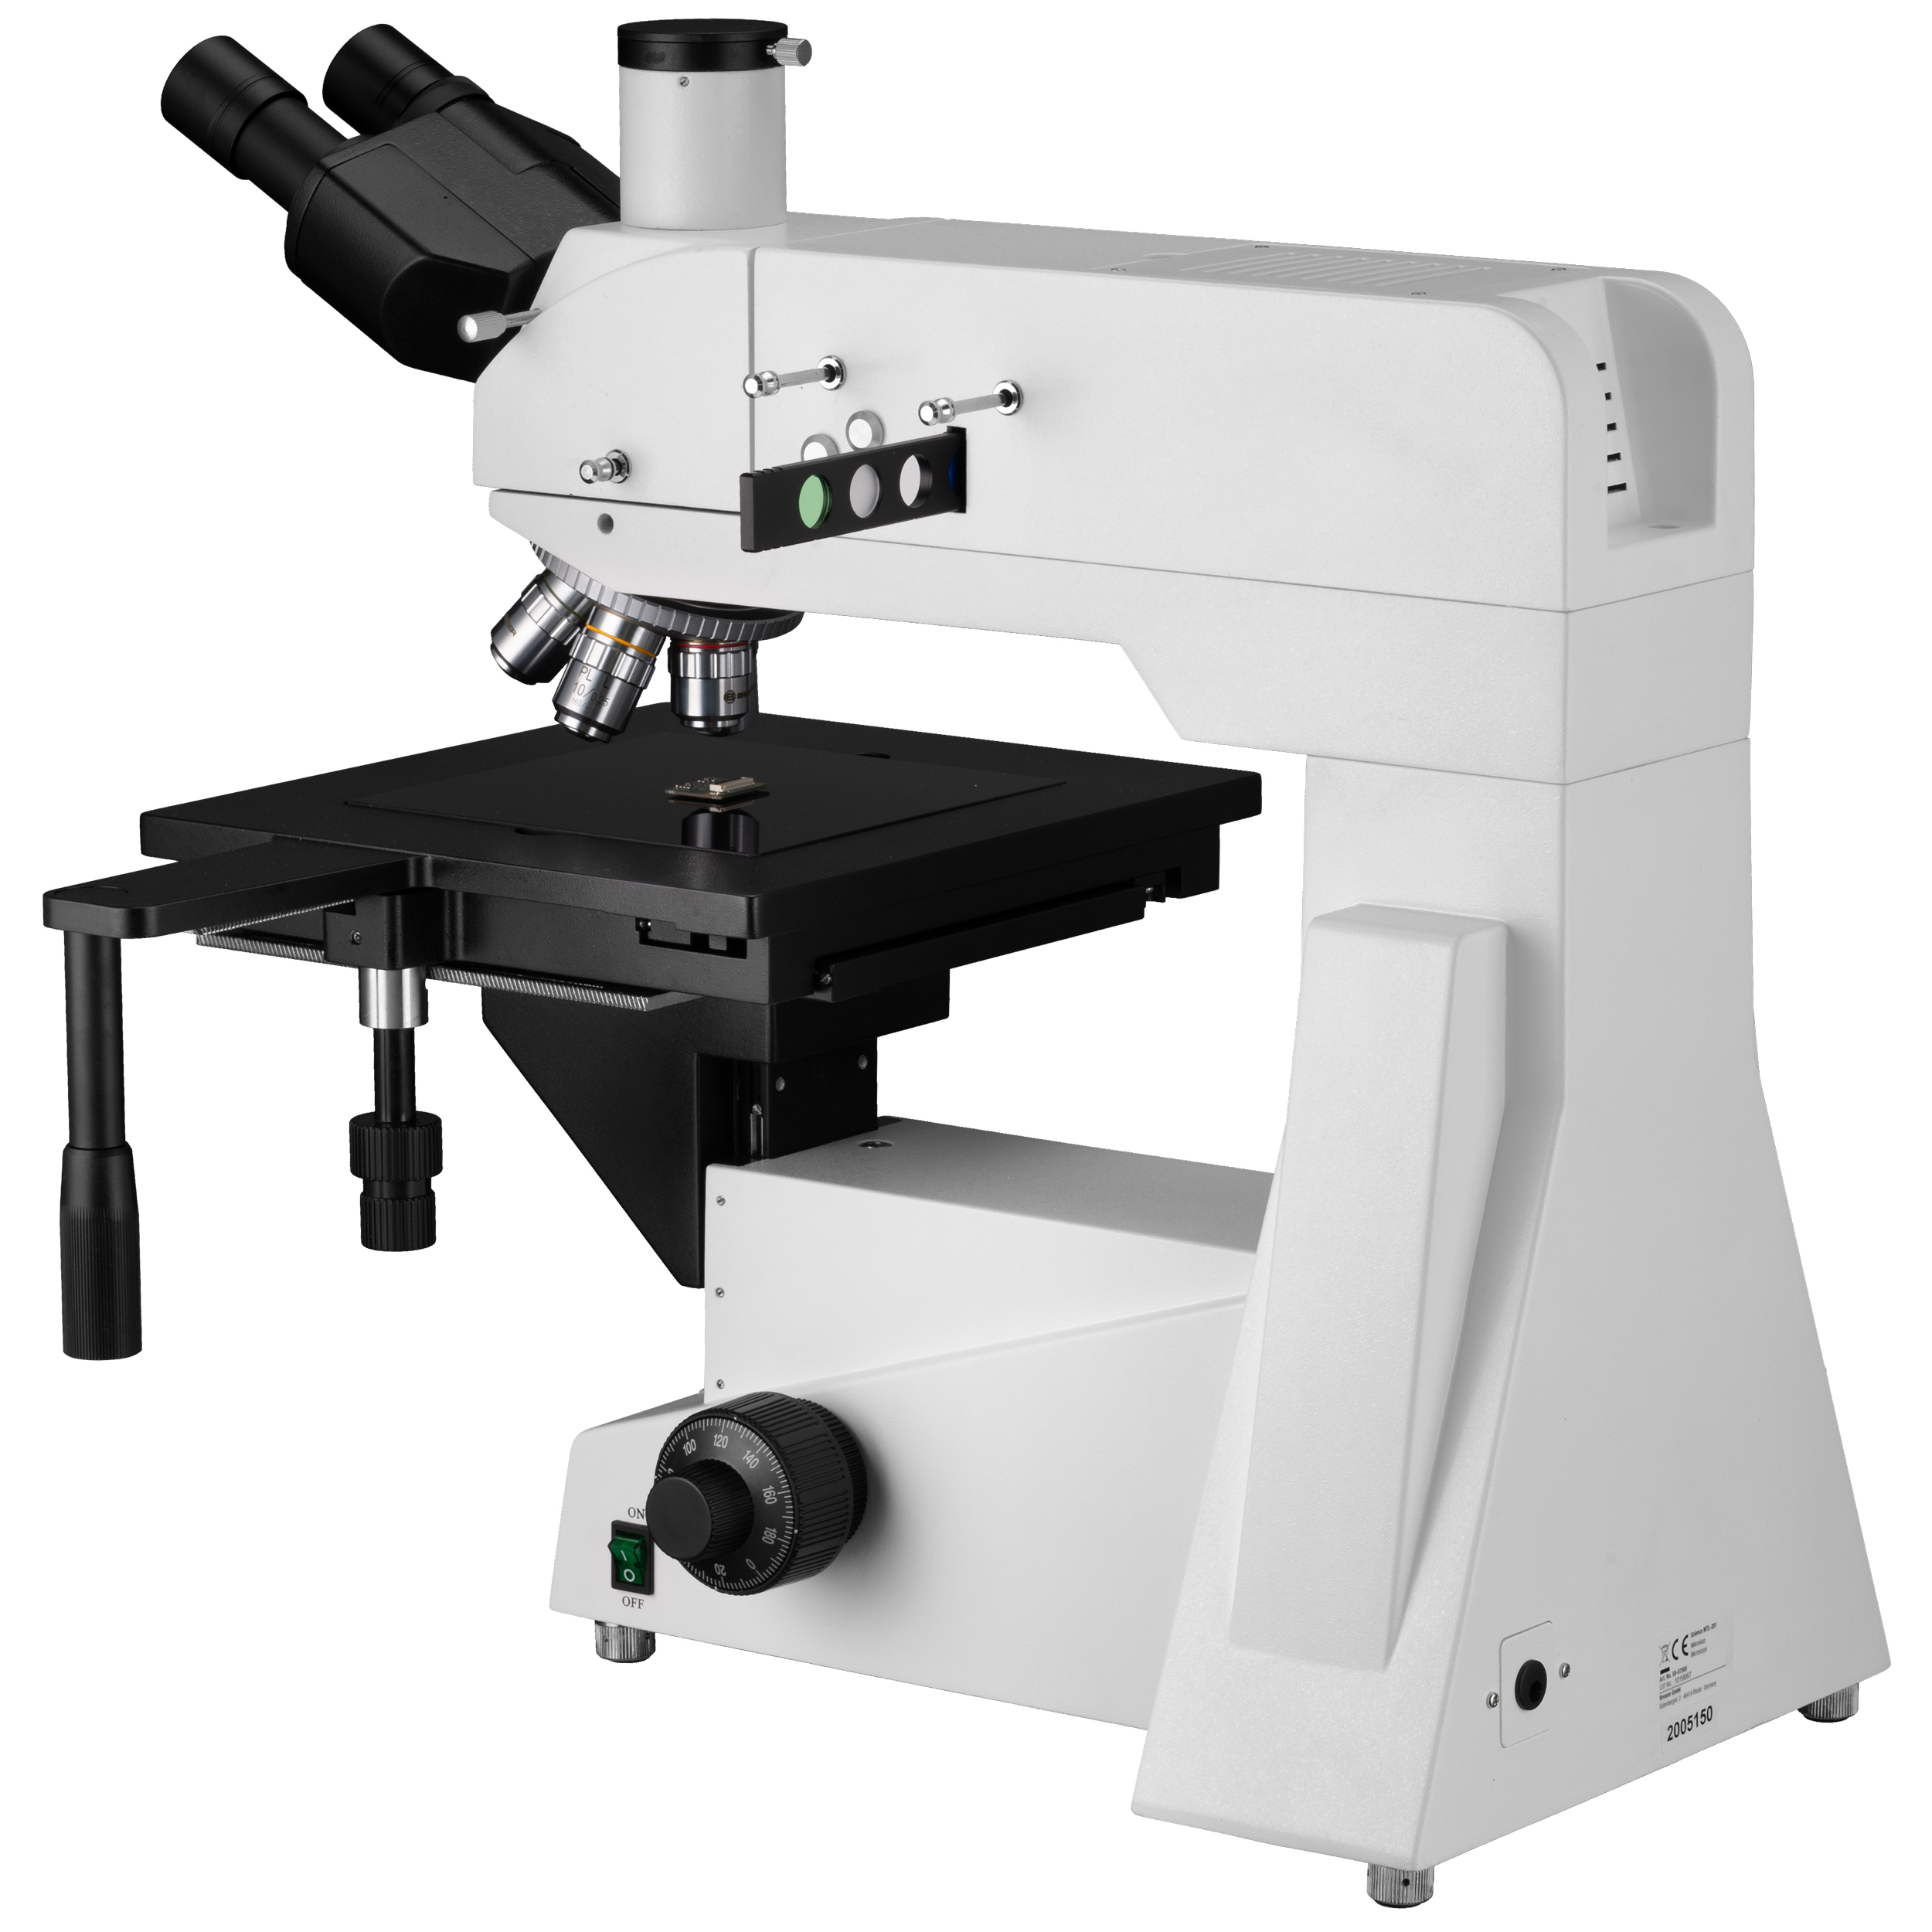 BRESSER Science MTL 201 50-800x Mikroskop